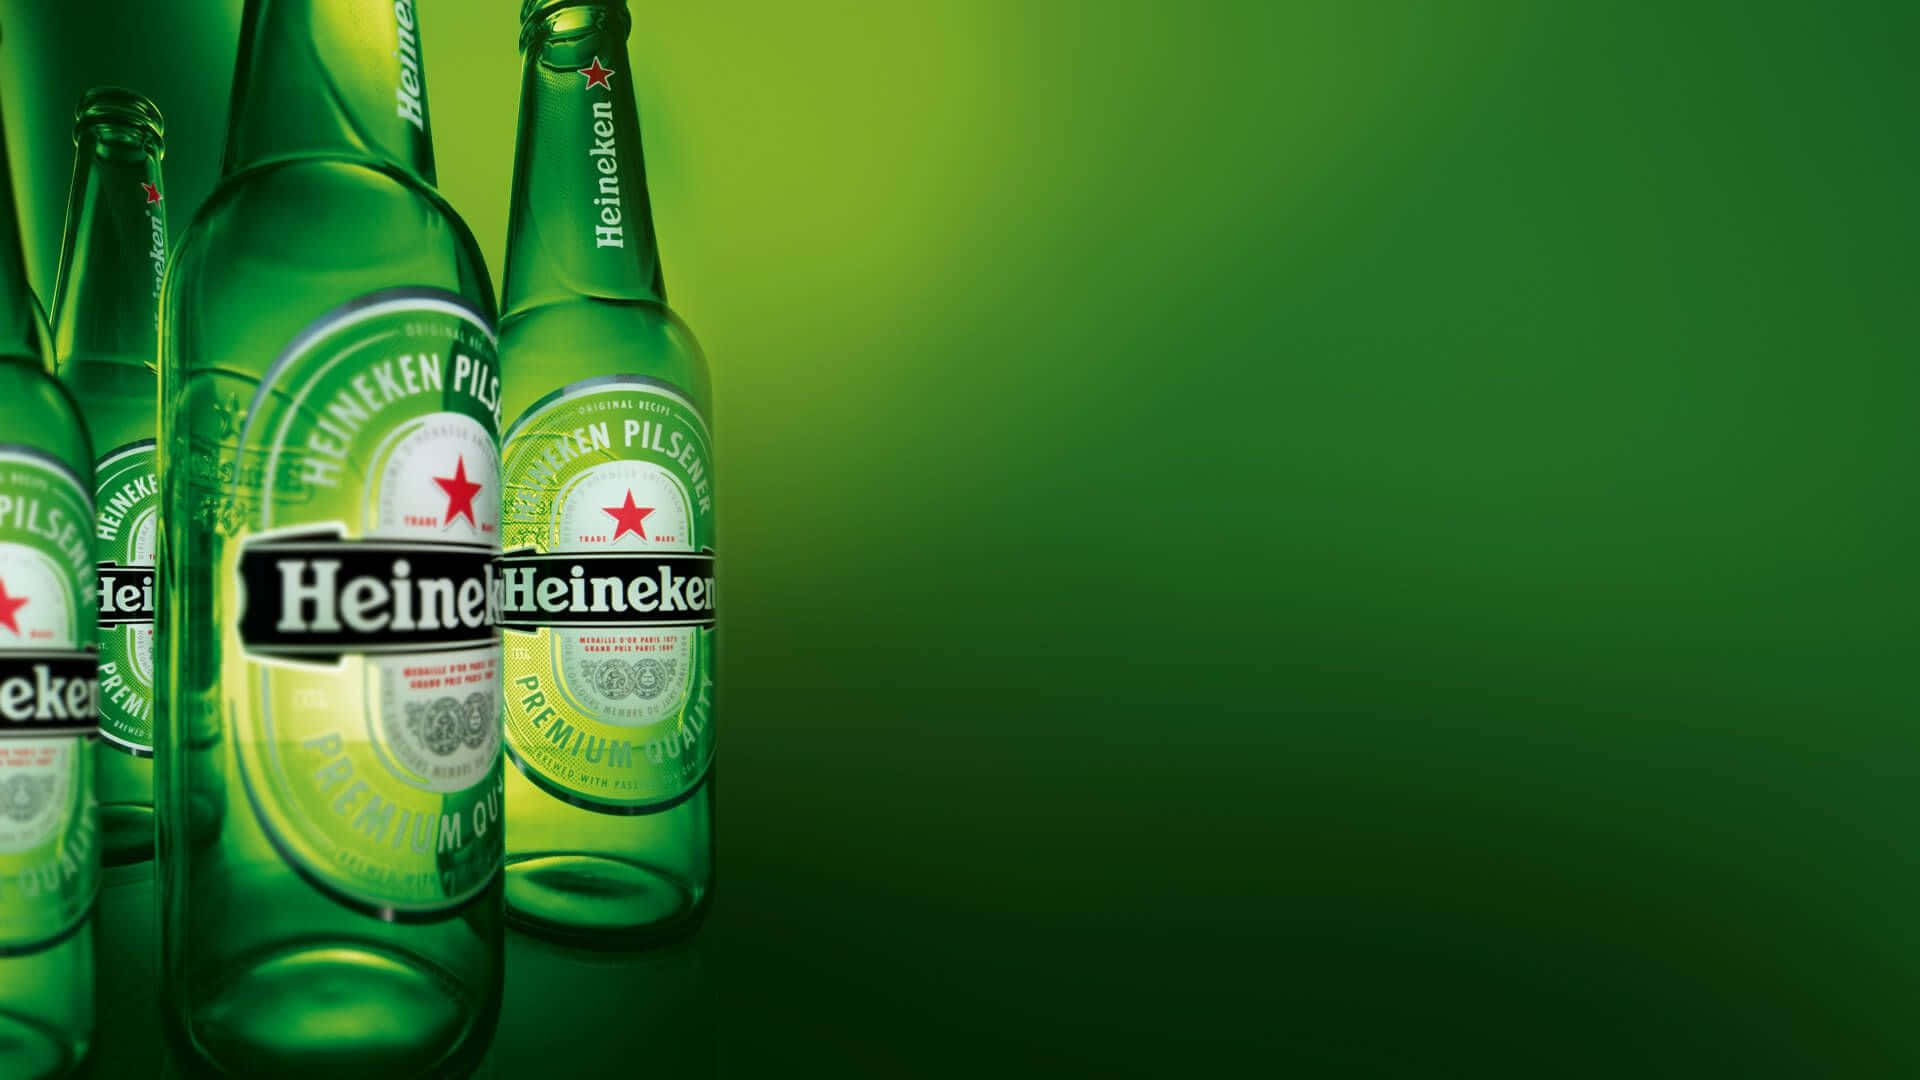 Heinekenbaggrund I Størrelsen 1920 X 1080